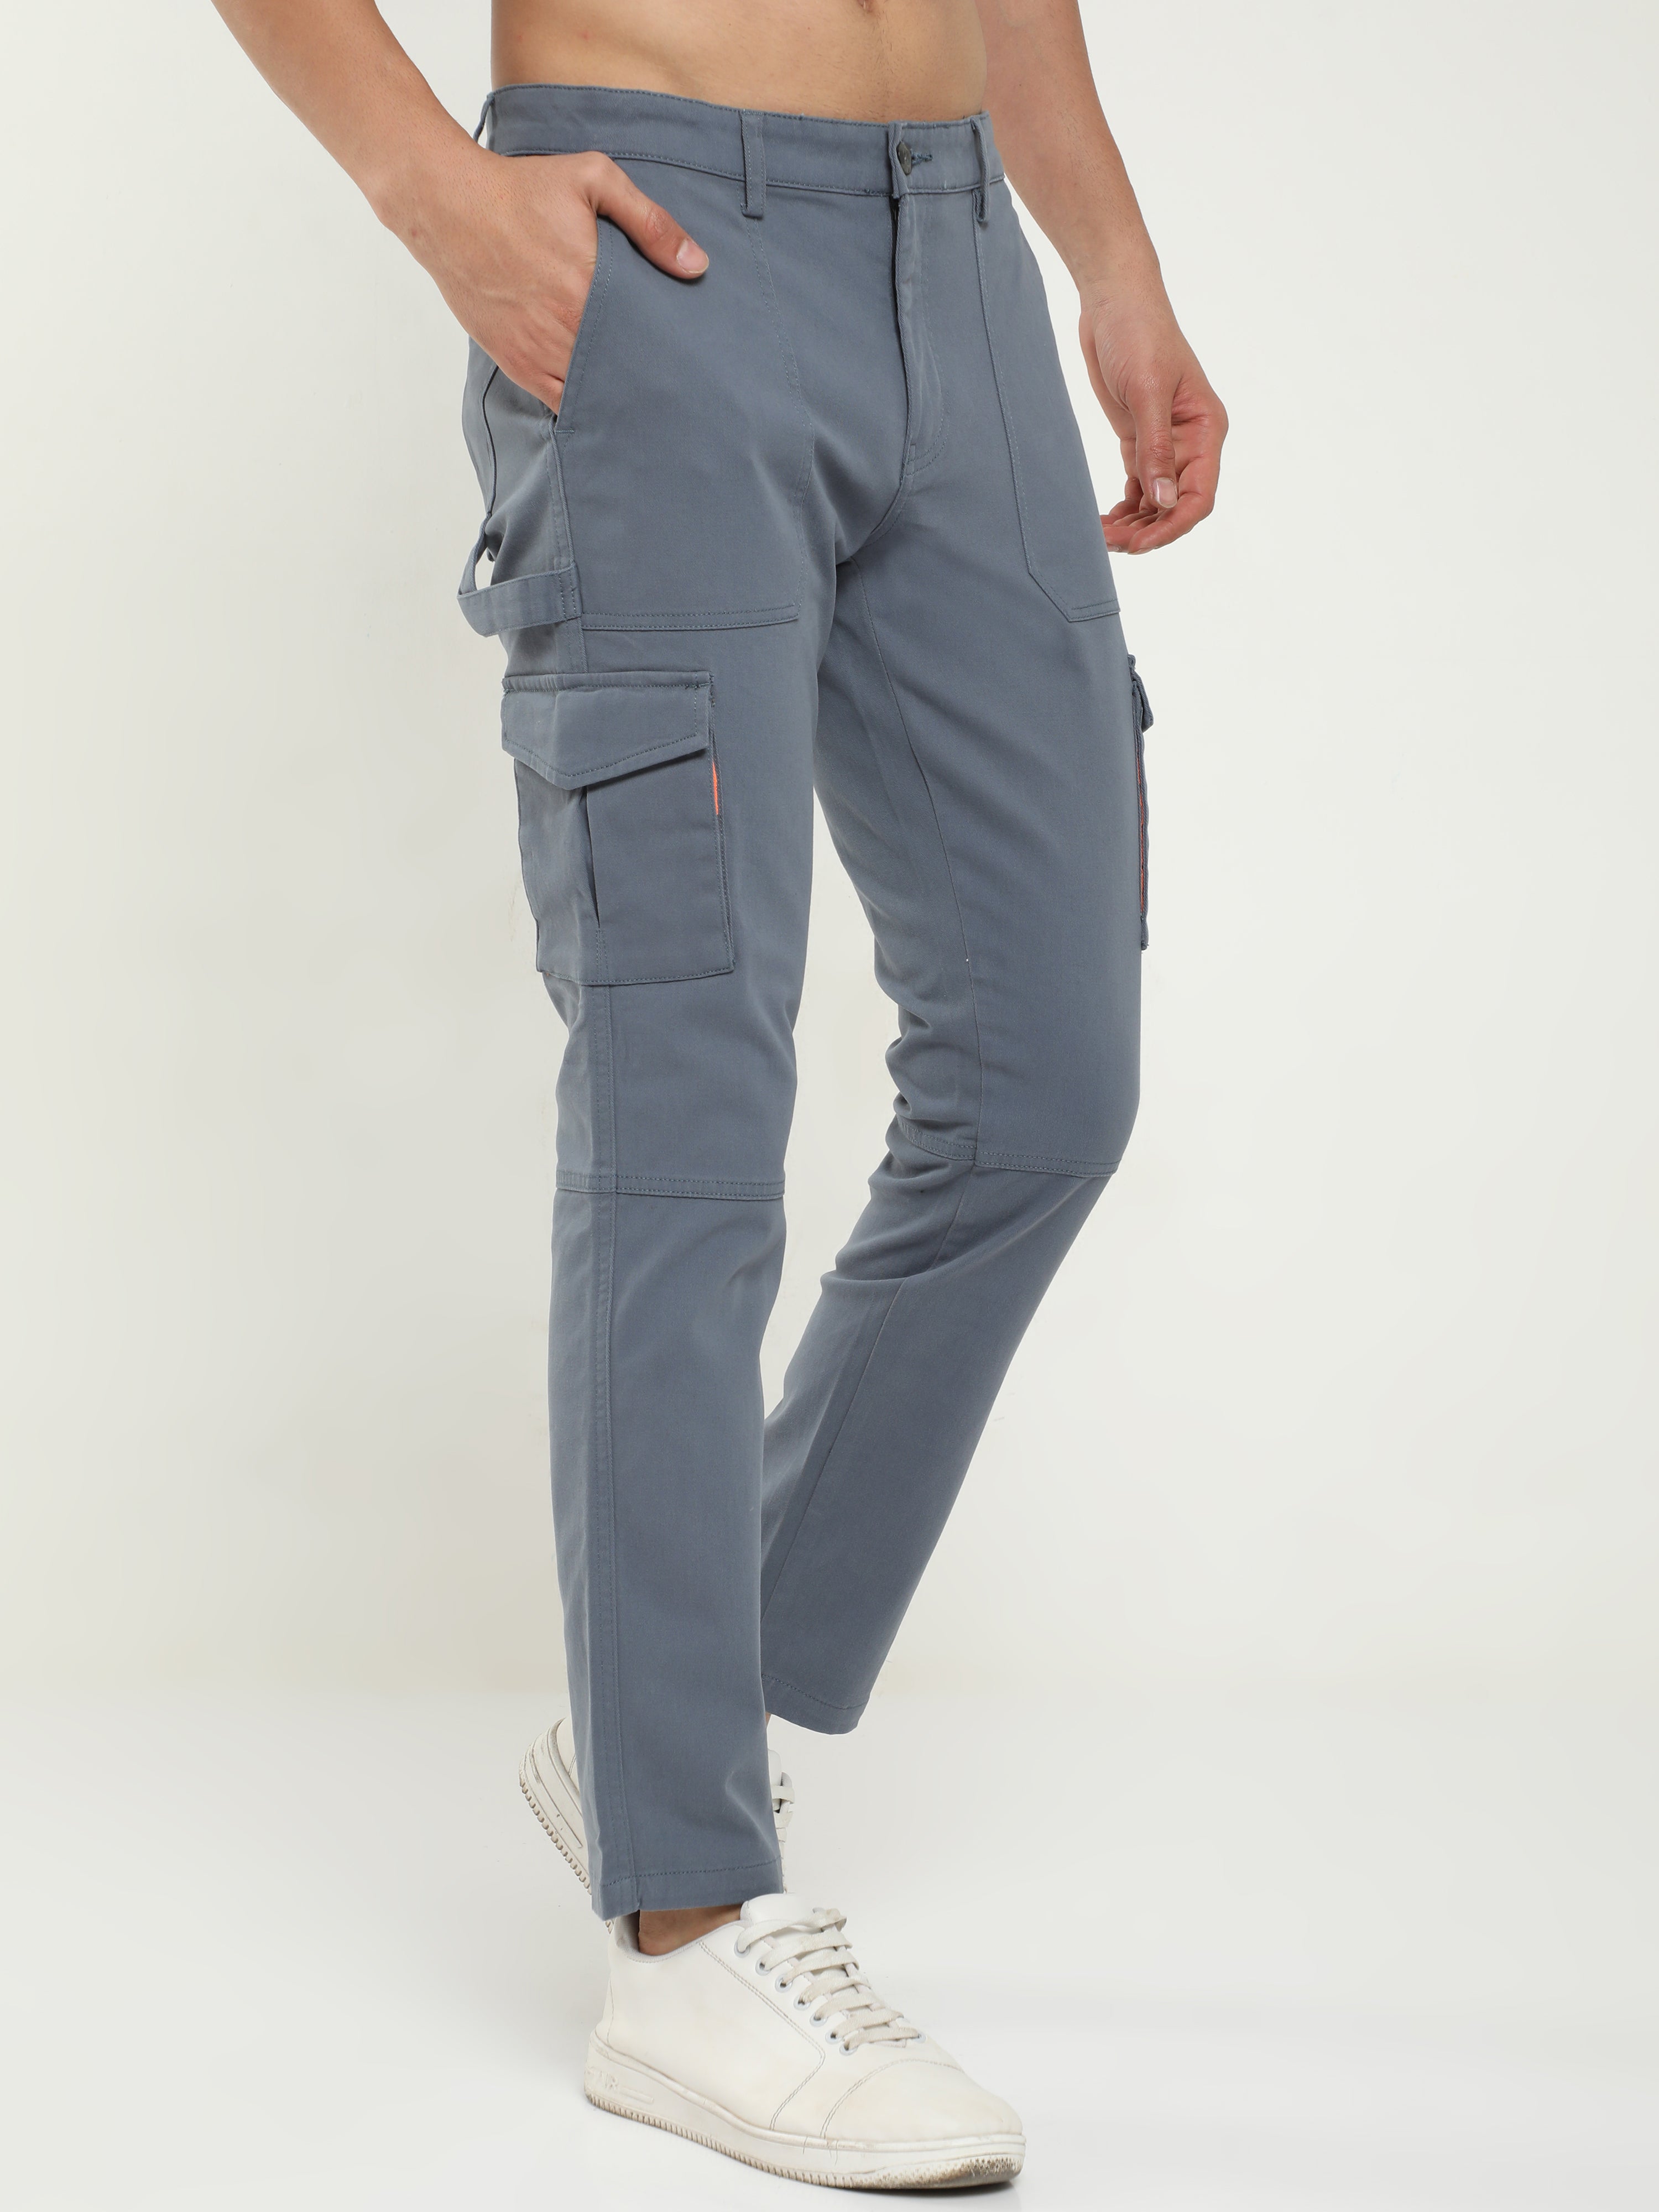 Cotton Solid Mangos Fashion Men Light Grey Cargo Pant, Slim Fit at Rs  290/piece in Kolkata